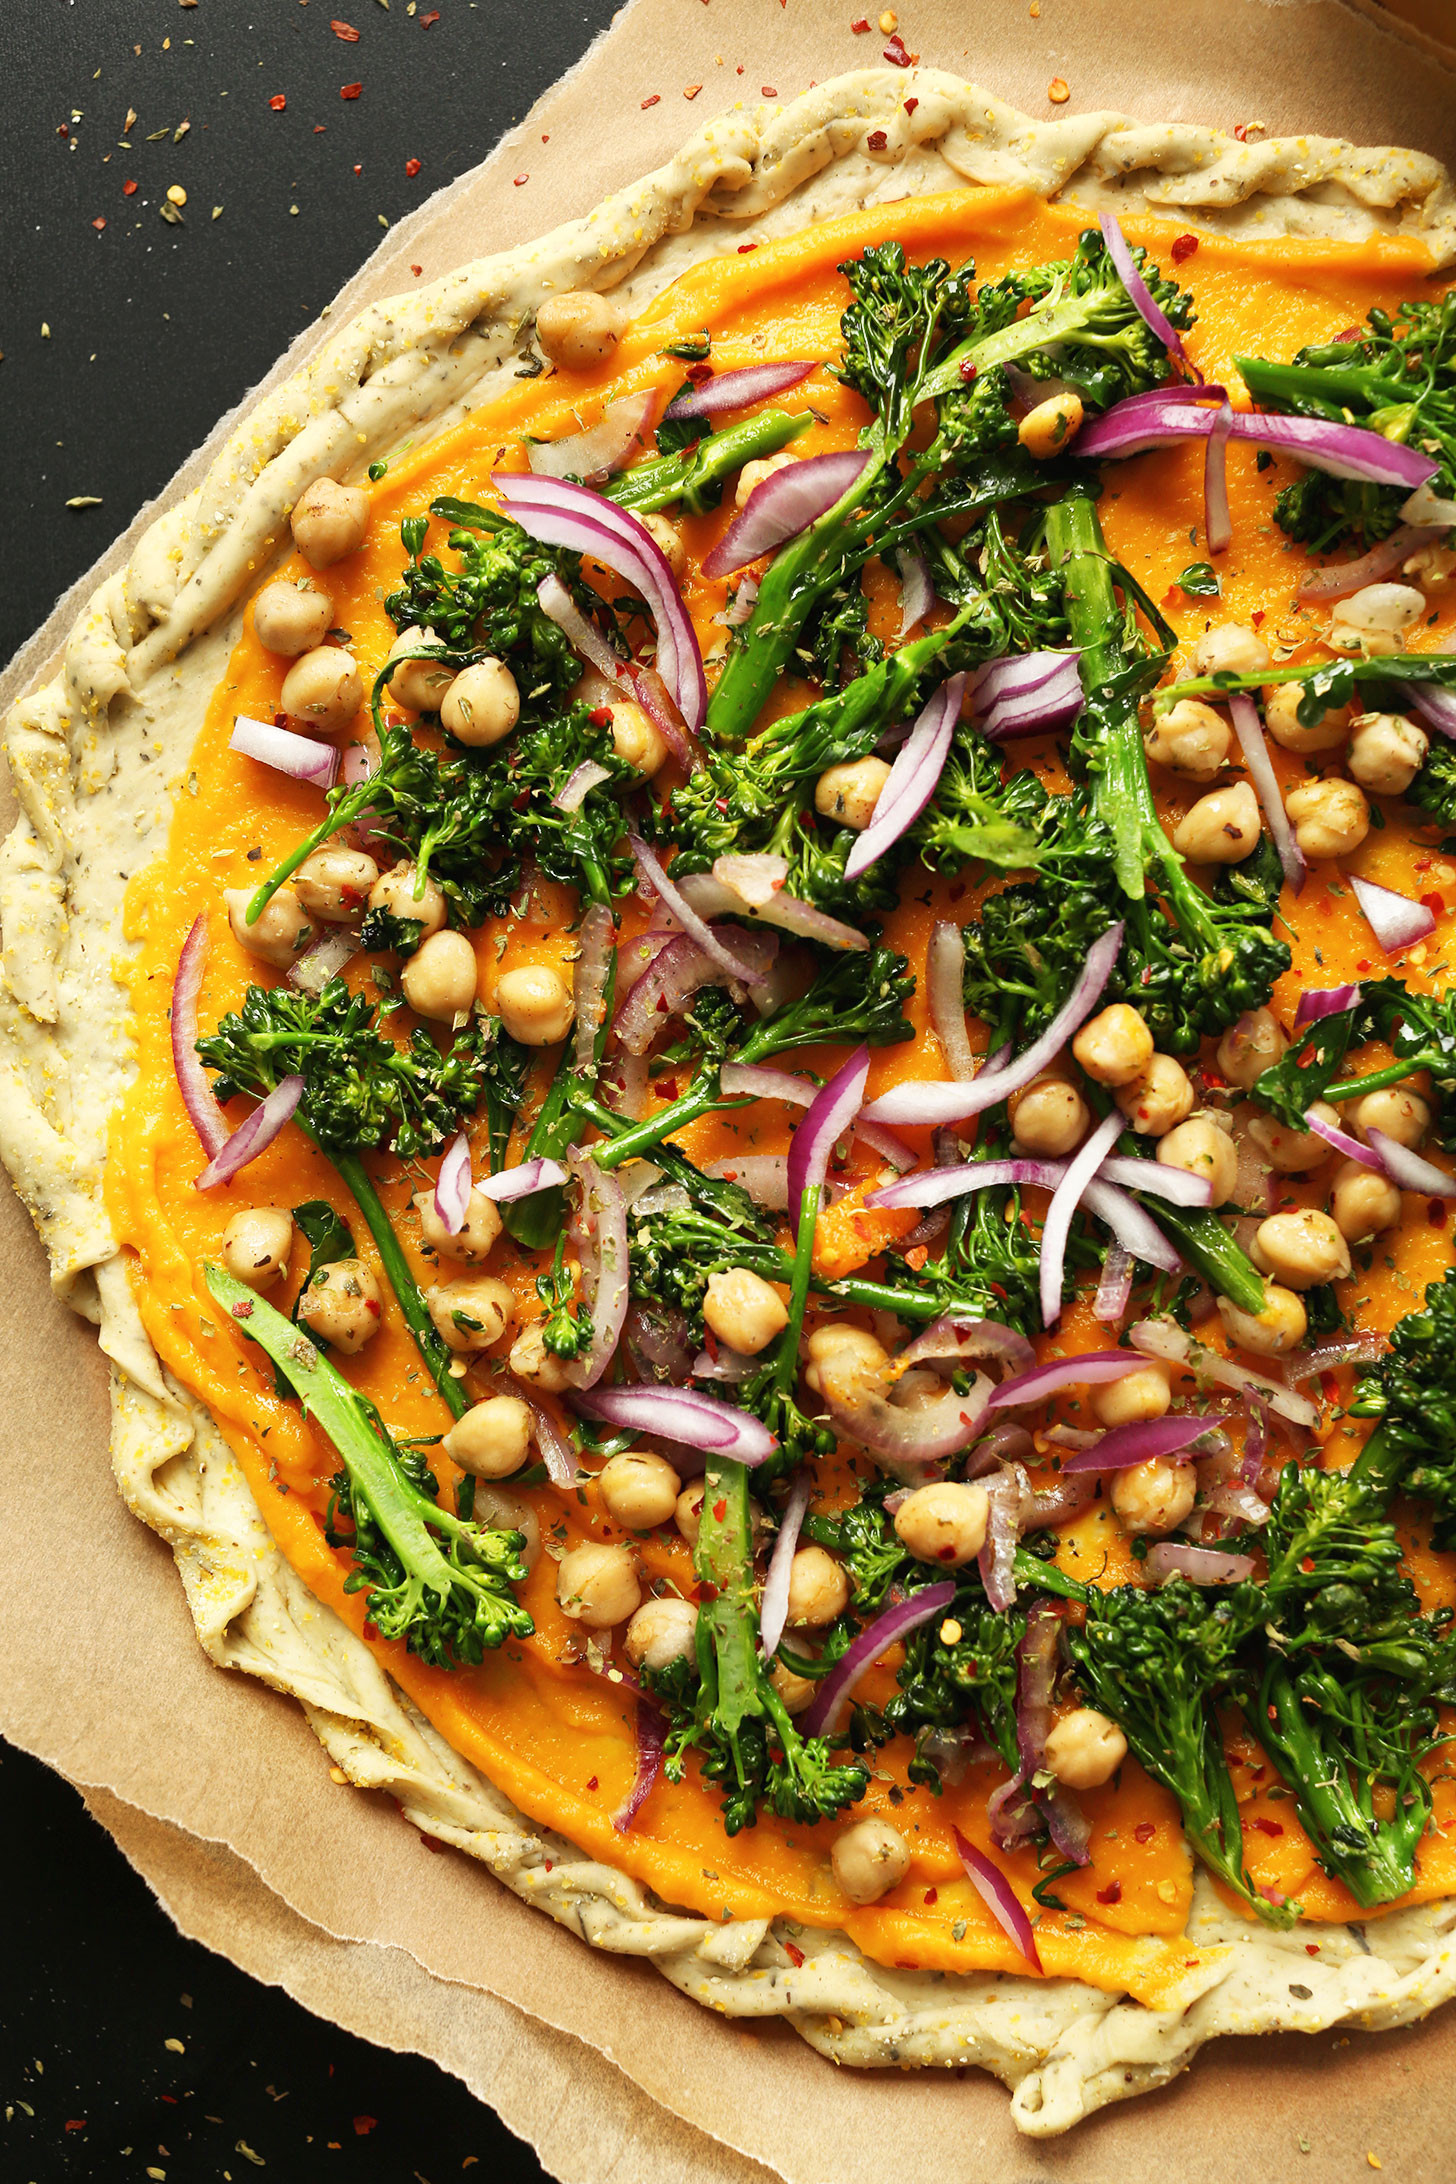 Delicious Healthy Vegetarian Recipes
 30 delicious vegan dinner recipes for happy tummies